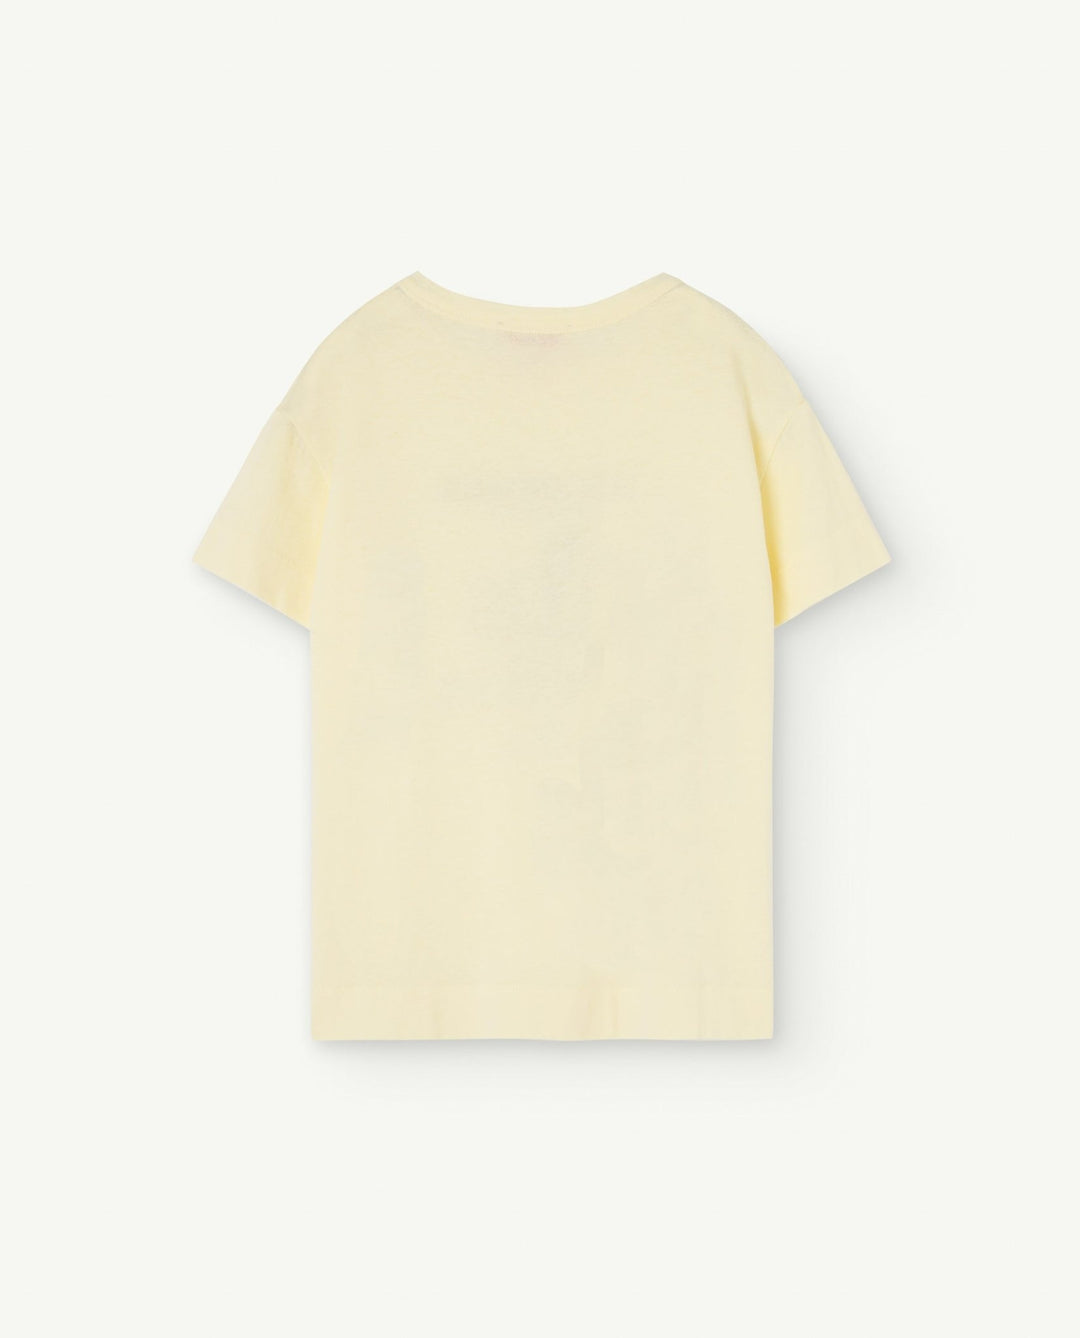 Rooster T-Shirt - Sft Yellow - Posh New York